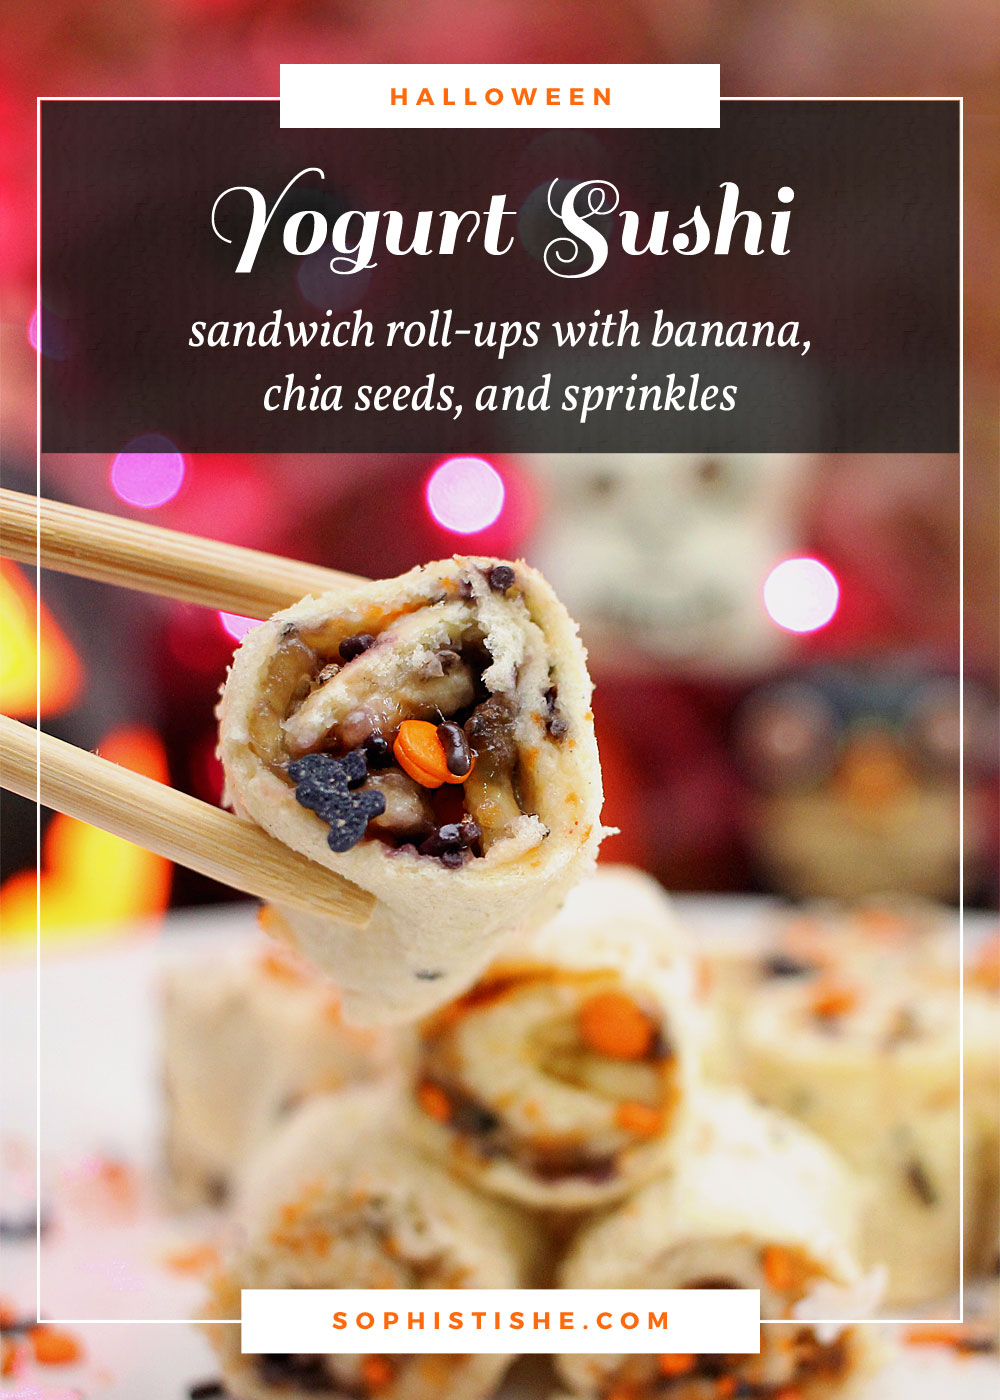 Yogurt Sushi Sandwich Roll-ups